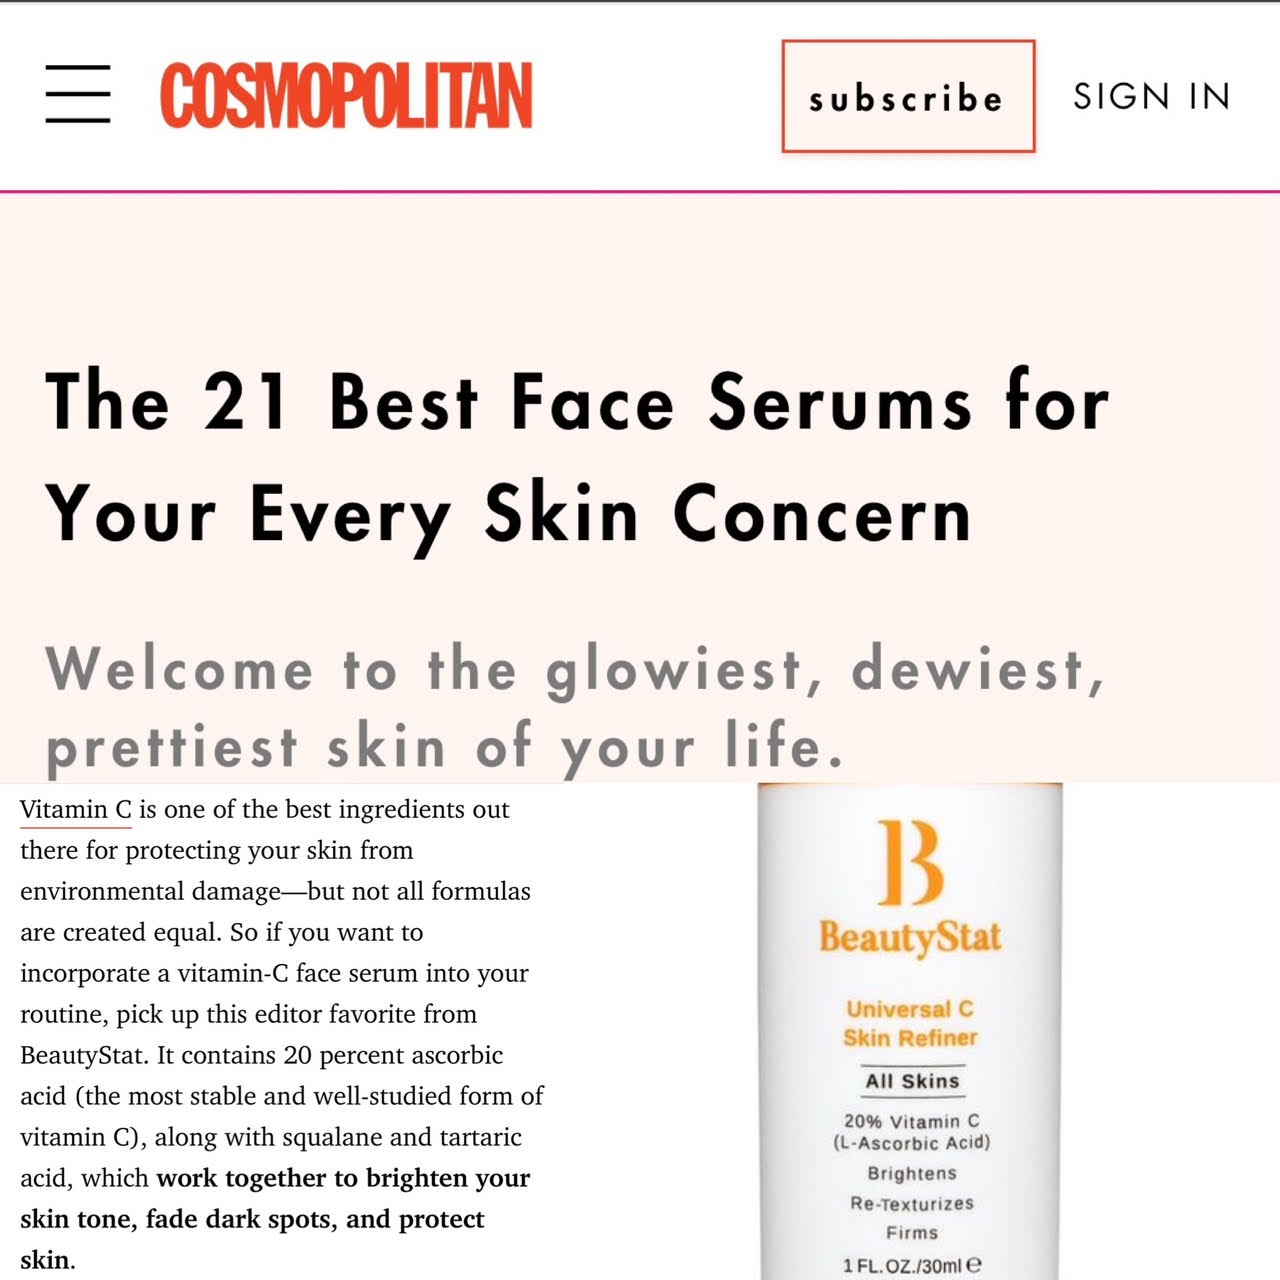 Cosmo Names BeautyStat As Best Brightening Vitamin C Serum: Skincare Review